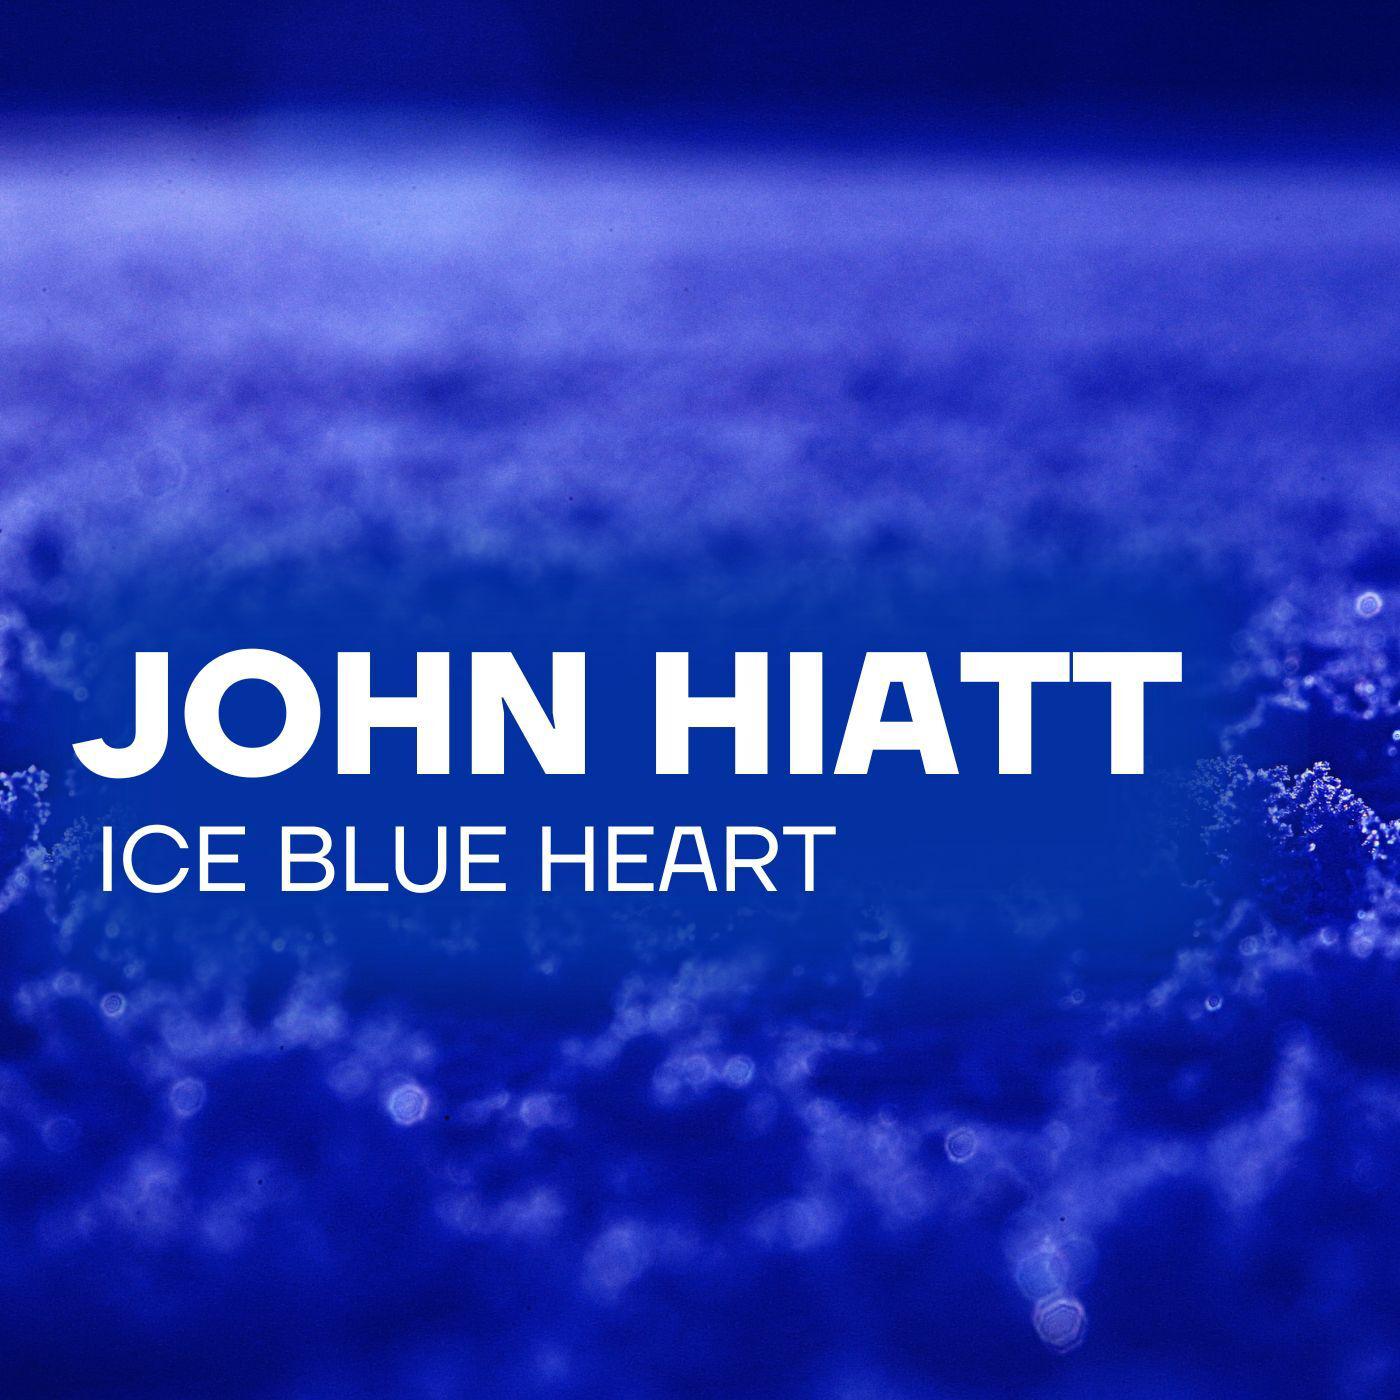 John Hiatt - Is Anybody There? (Live)